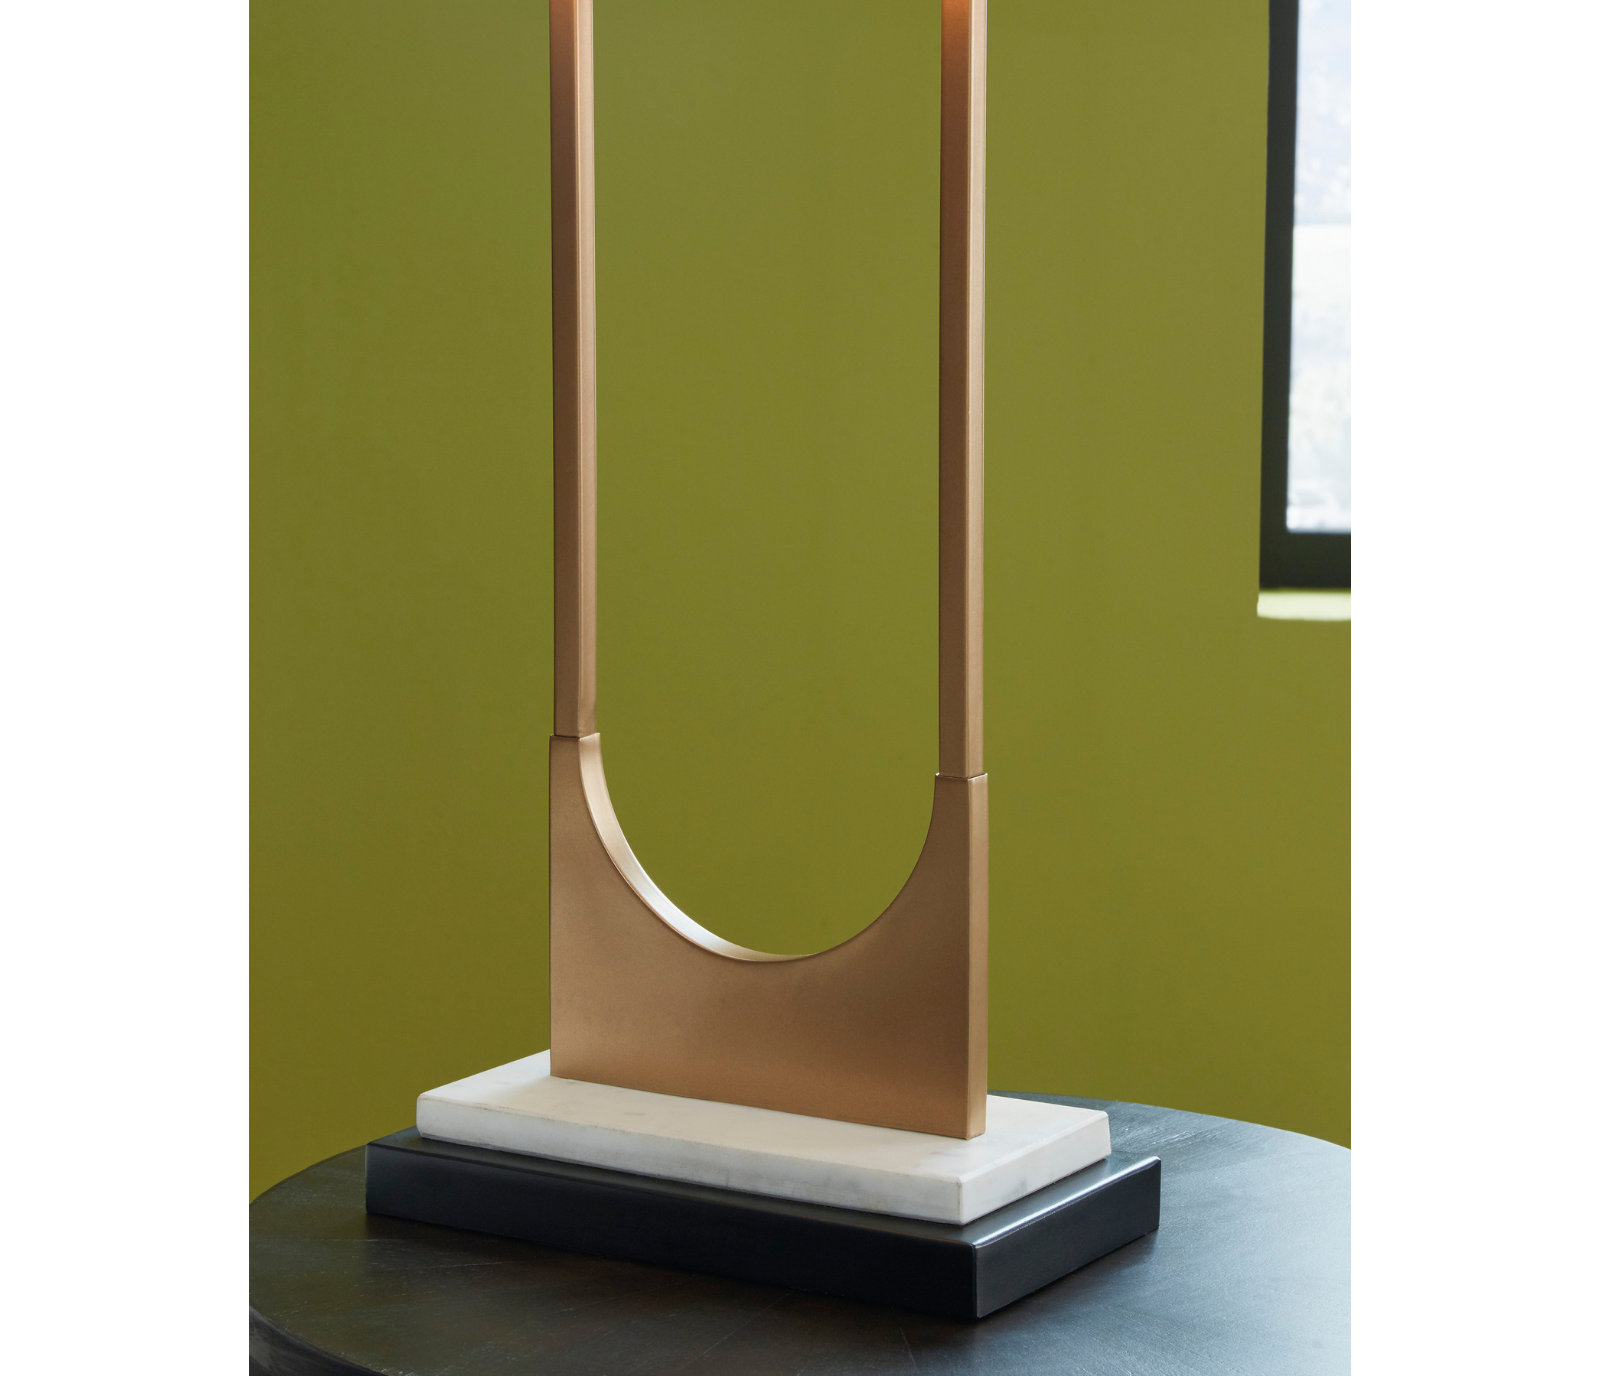 The Malana Table Lamp